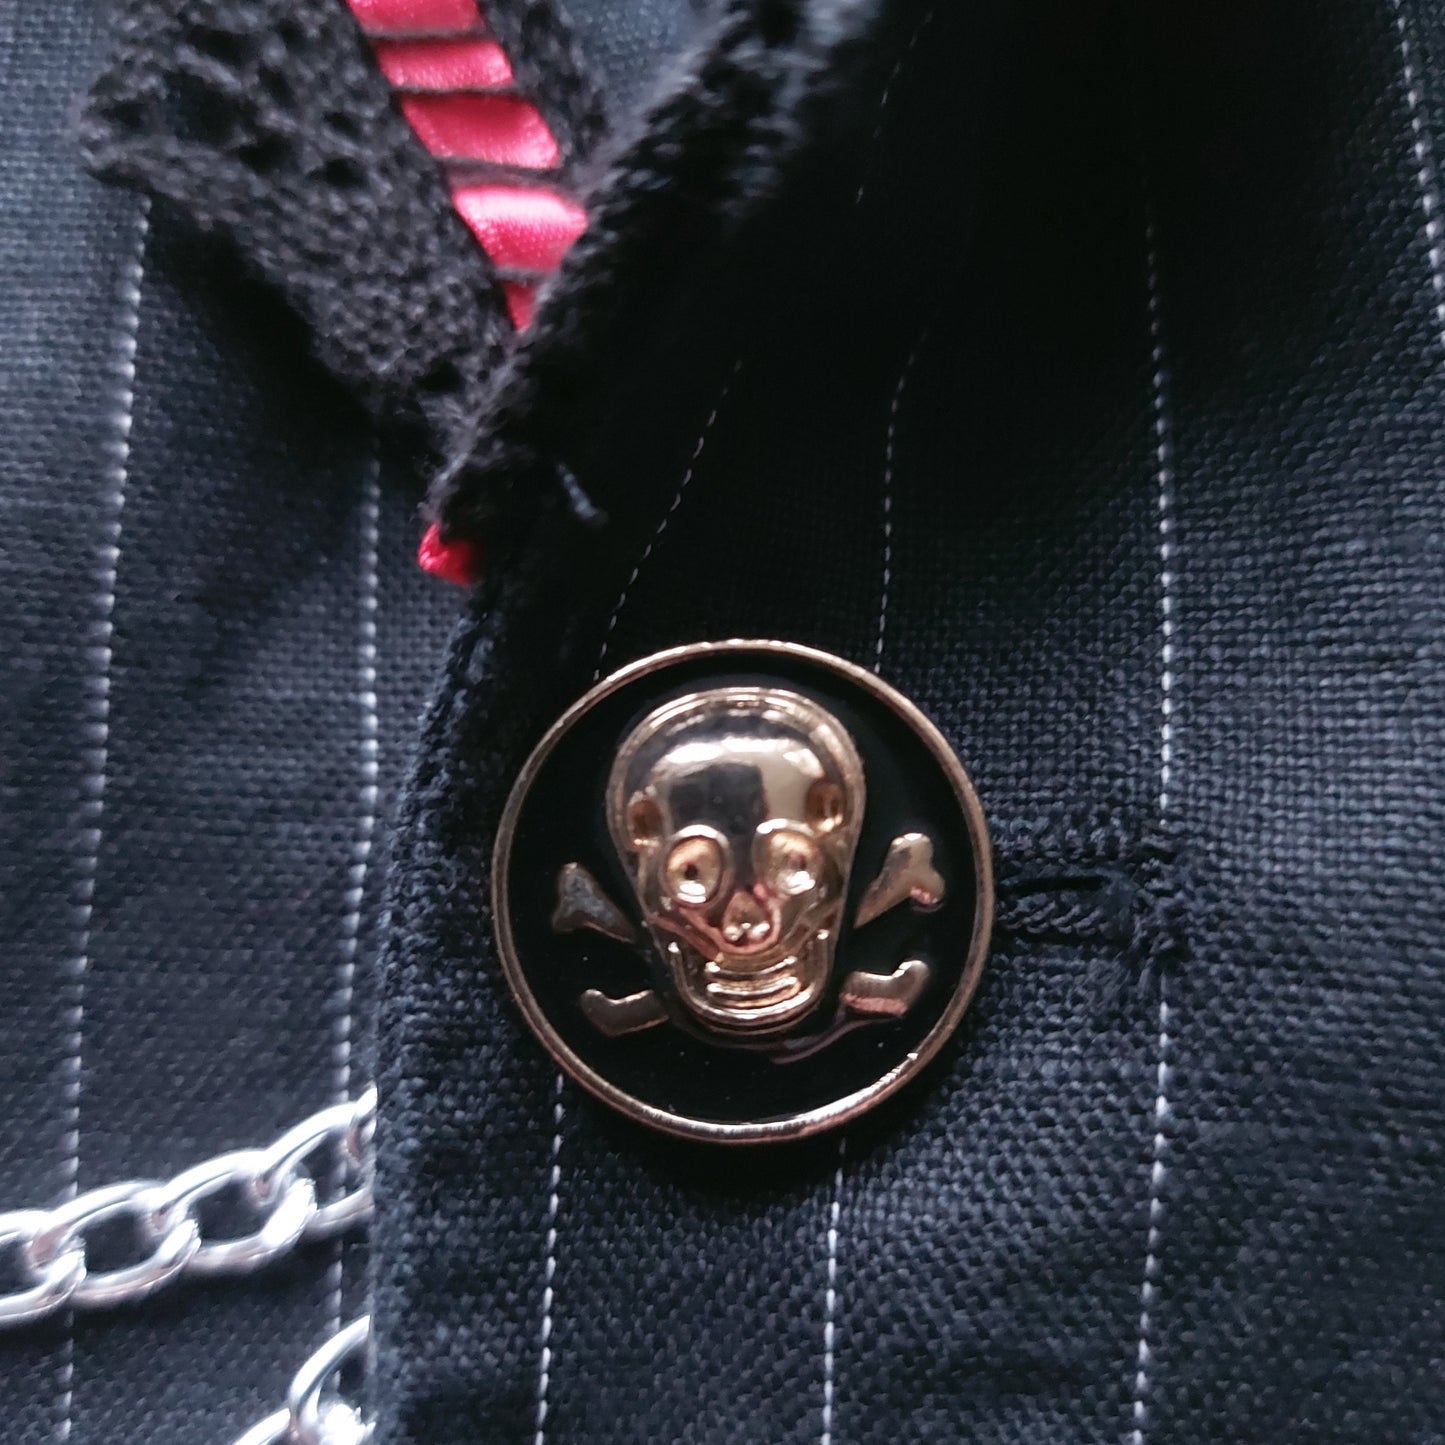 Punk Goth Emo Pinstripe Jacket - Men's M